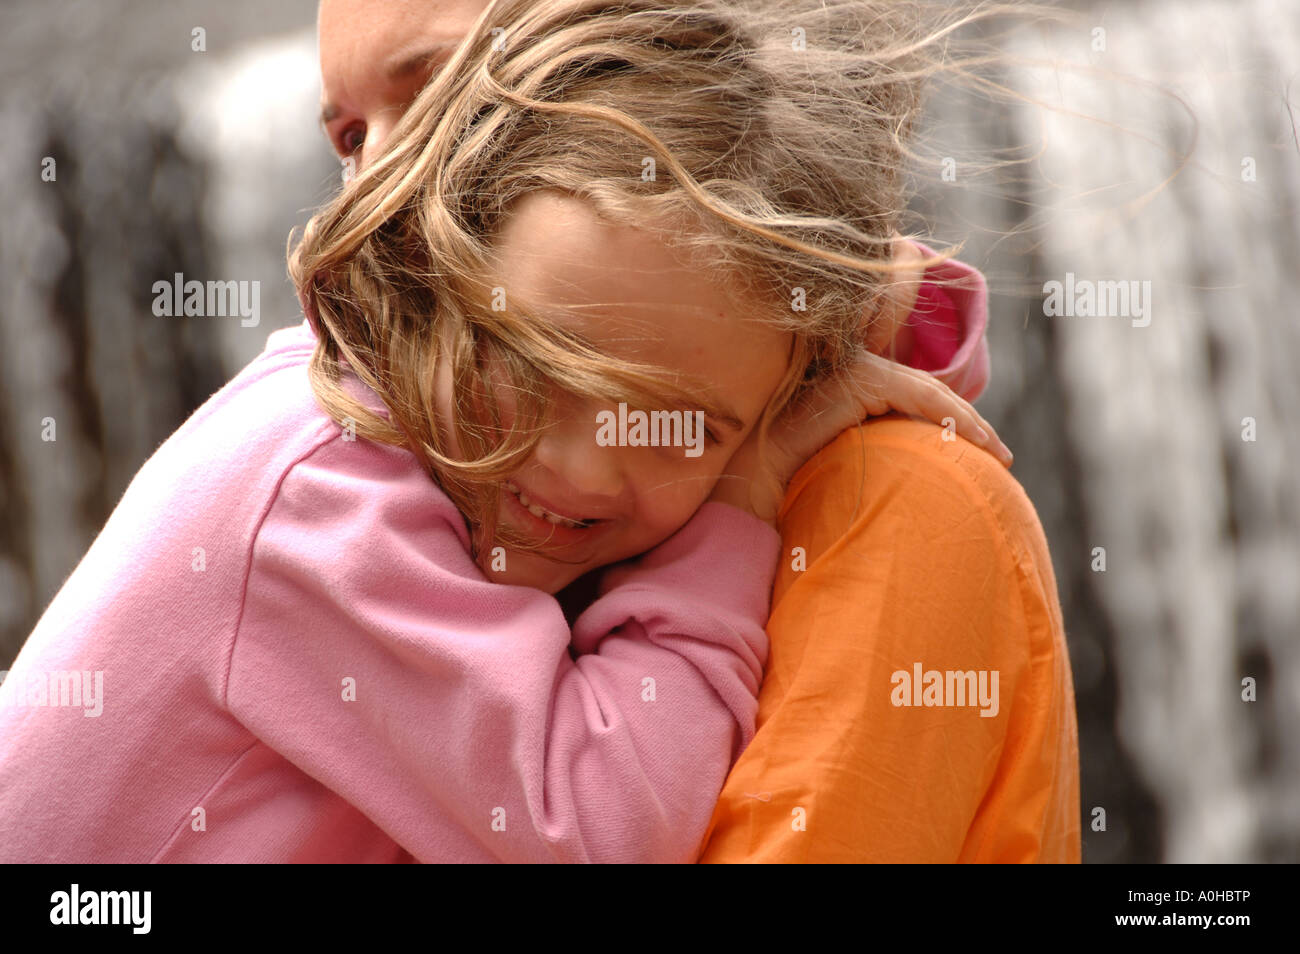 Под обломками нашли маму обнимающую ребенка крокус